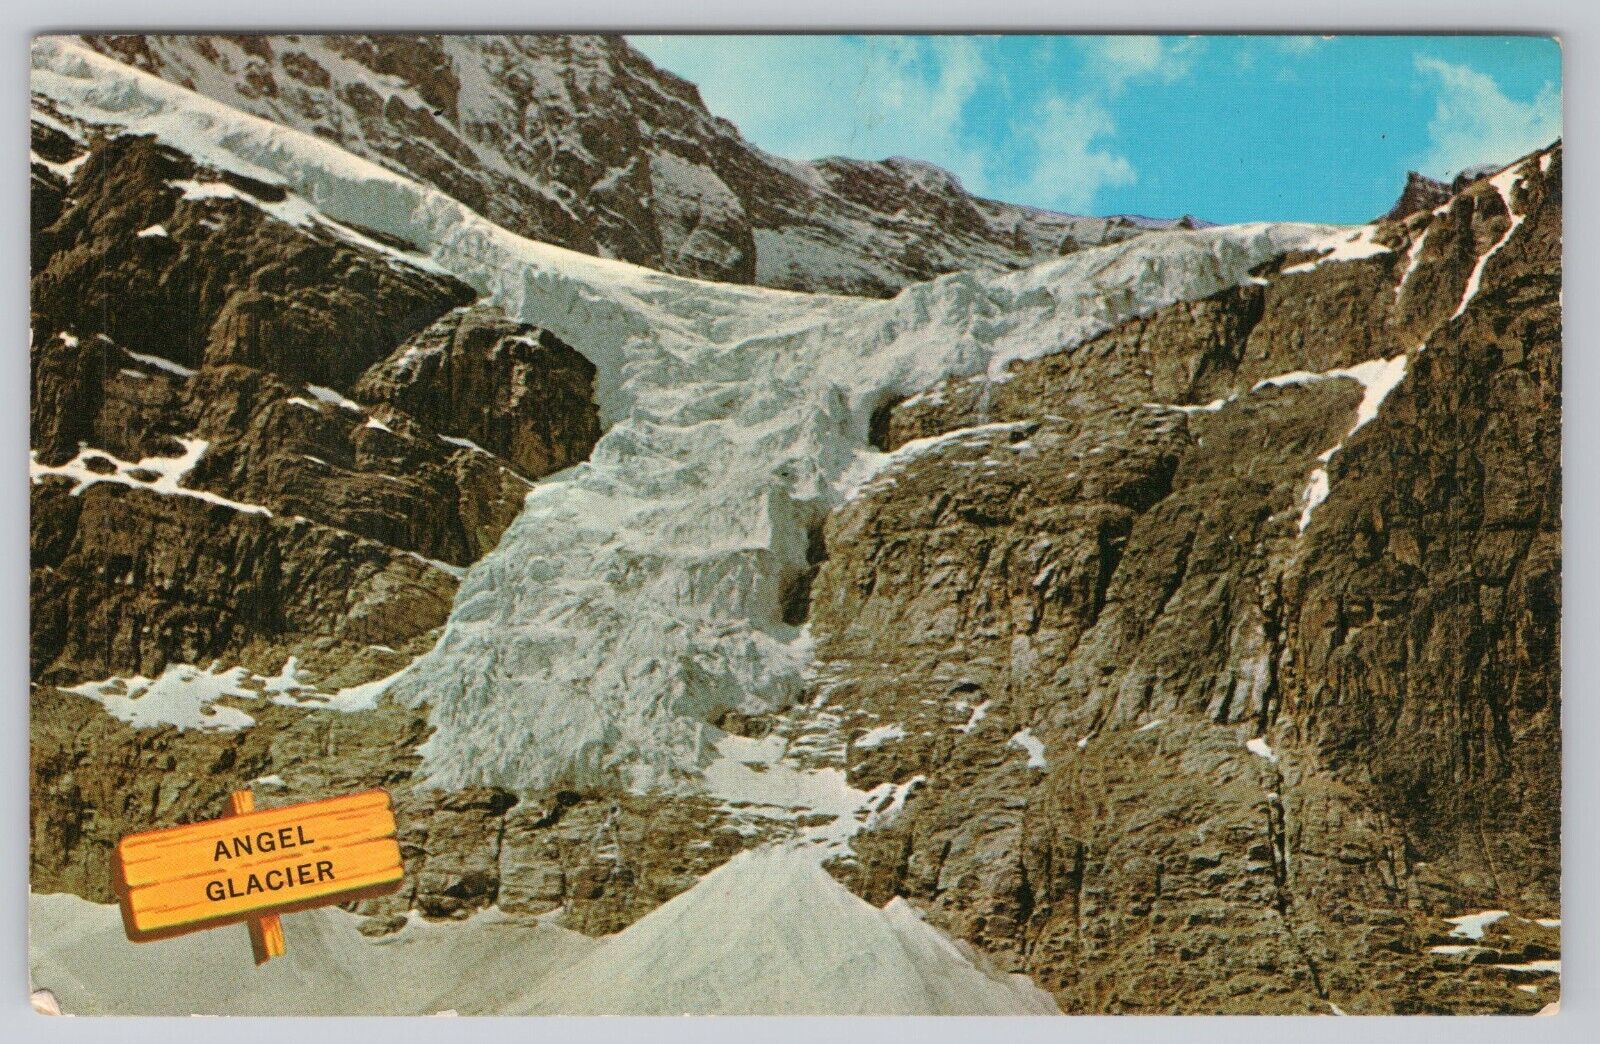 Angel Glacier Jasper Park Alberta Canada Postcard